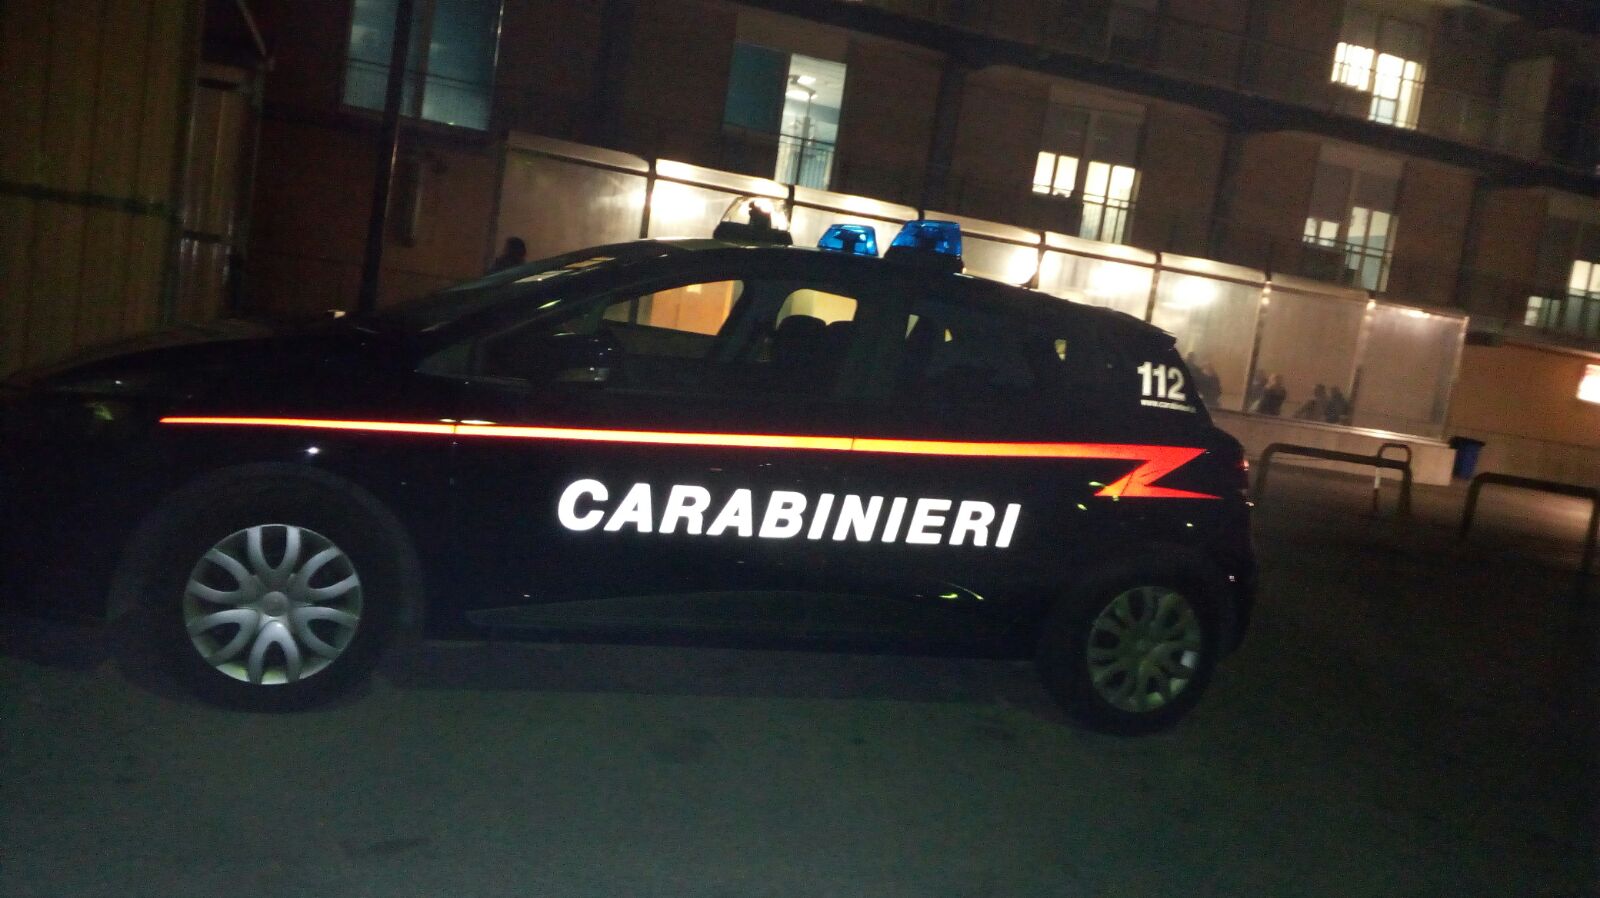 Carabinieri, Furto, guardie giurate, Napoli, ospedale San Paolo